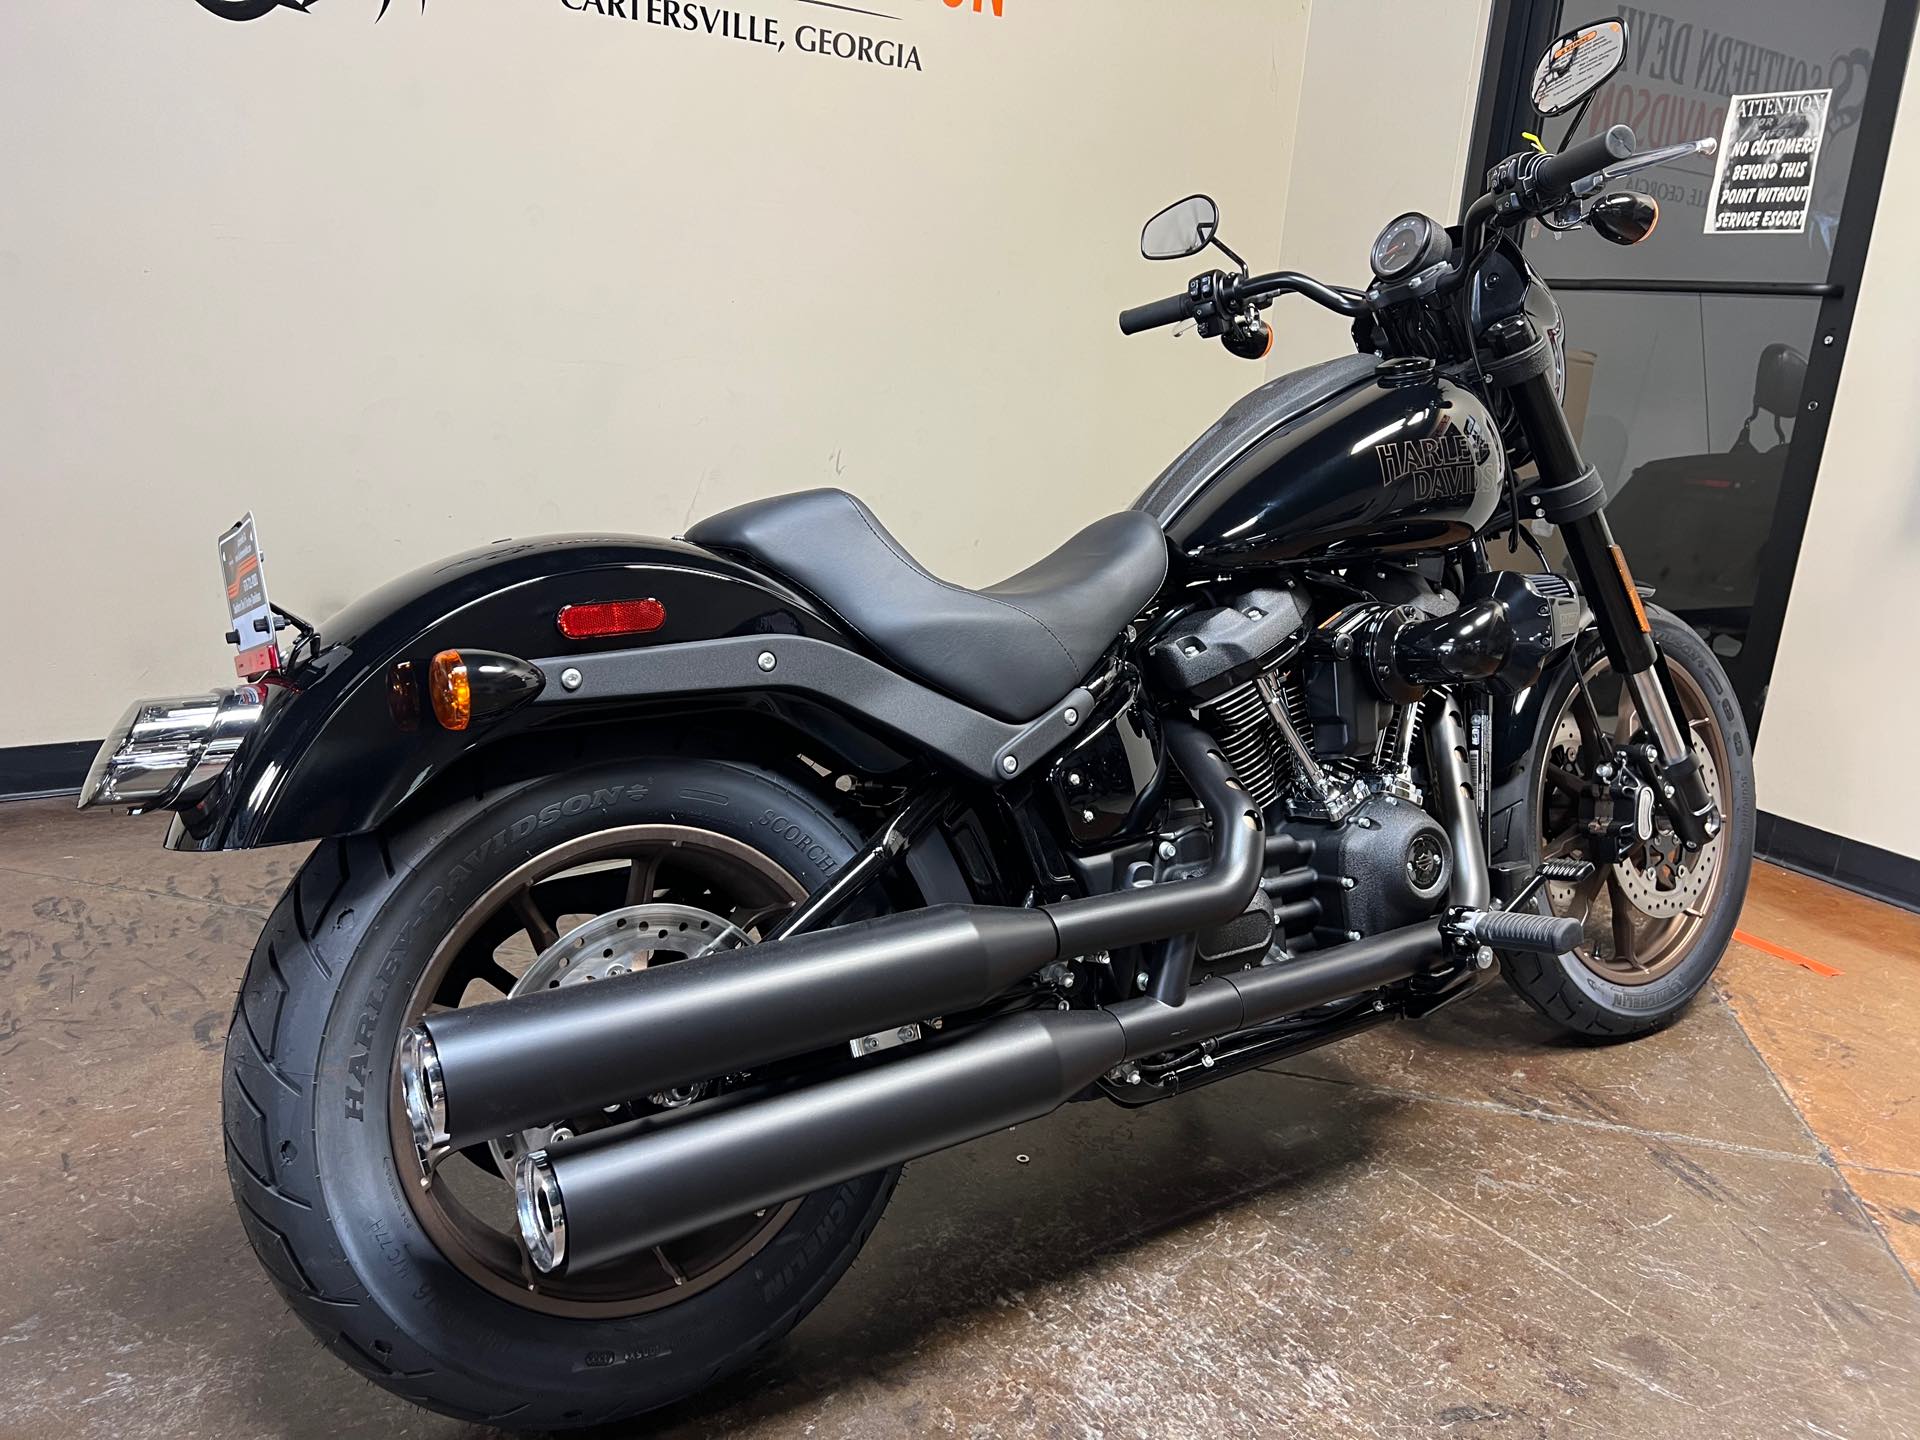 2023 Harley-Davidson Softail Low Rider S at Southern Devil Harley-Davidson